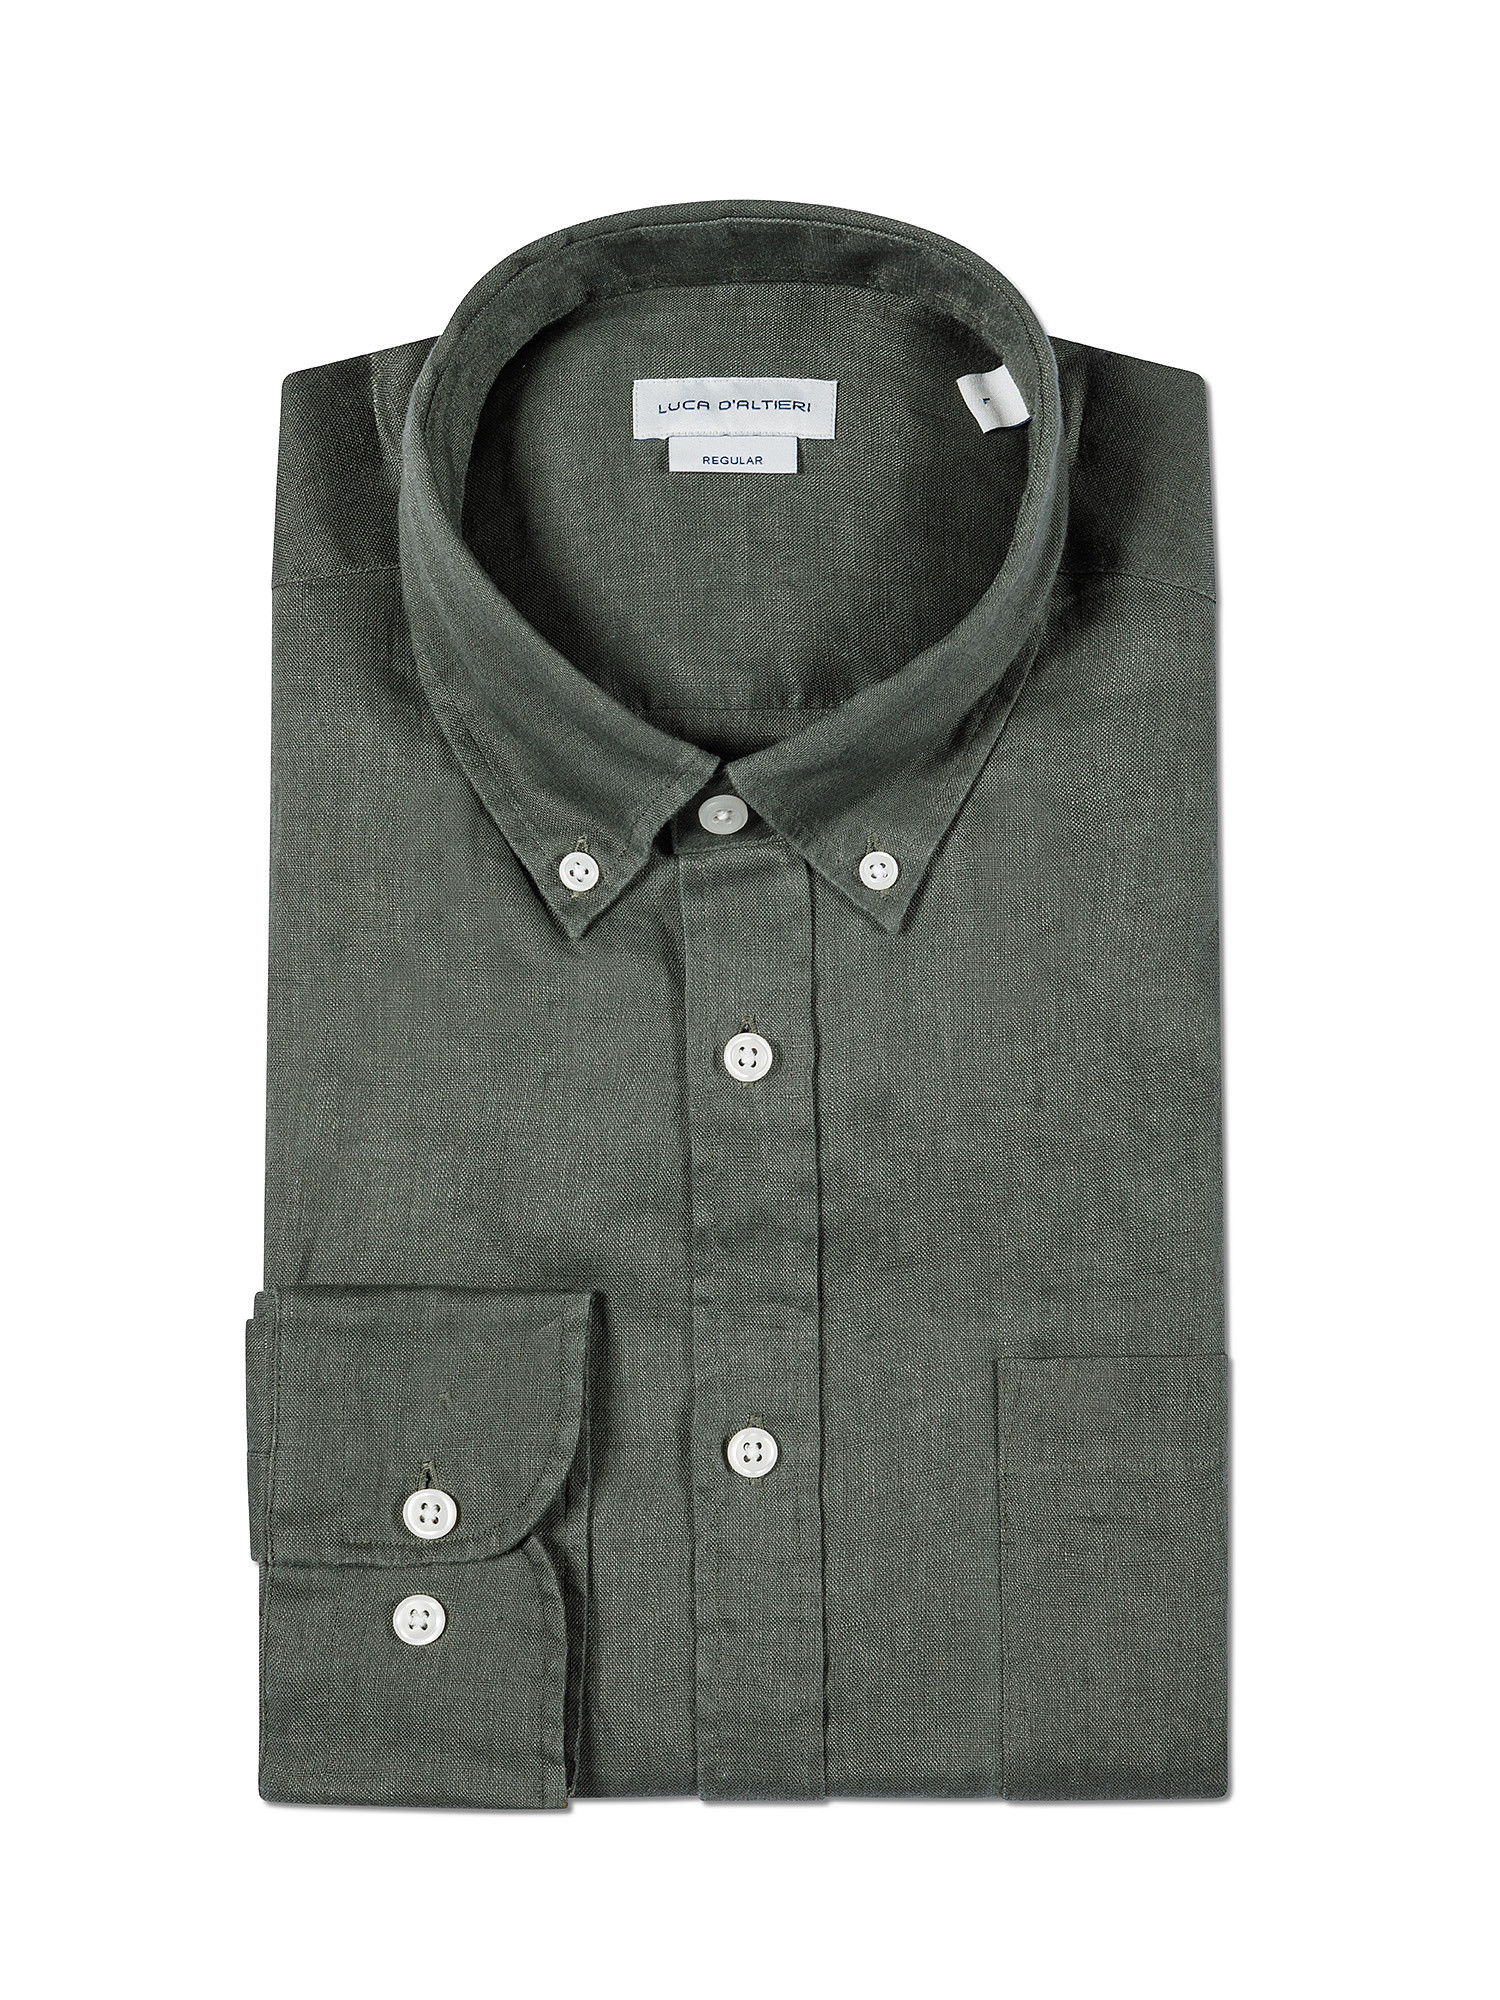 Luca D'Altieri - Regular fit shirt in pure linen, Sage Green, large image number 2